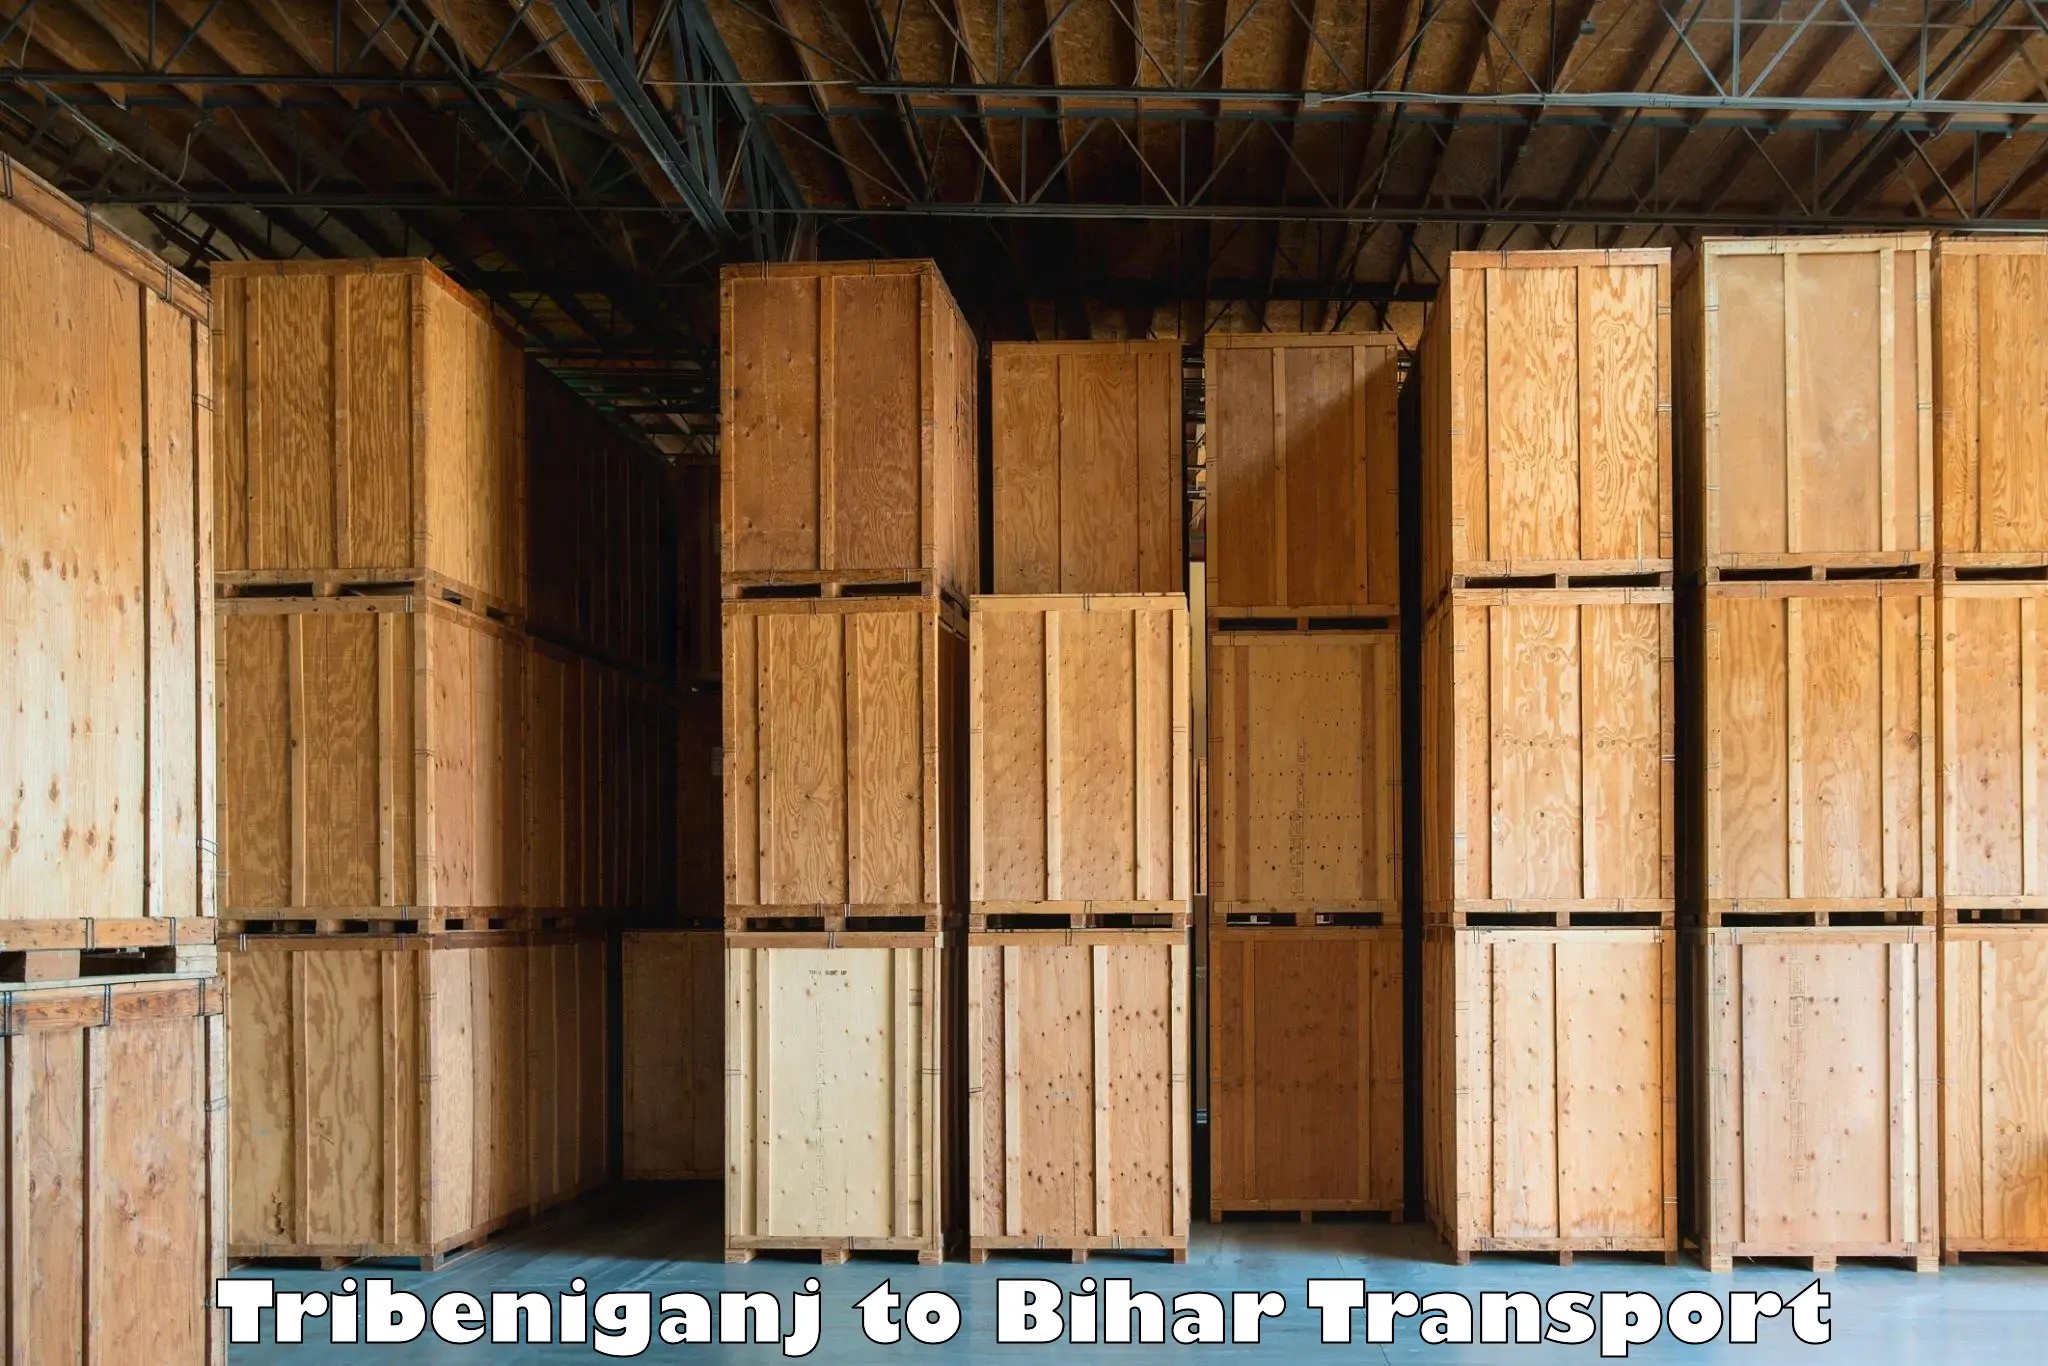 Transport shared services Tribeniganj to Bankipore